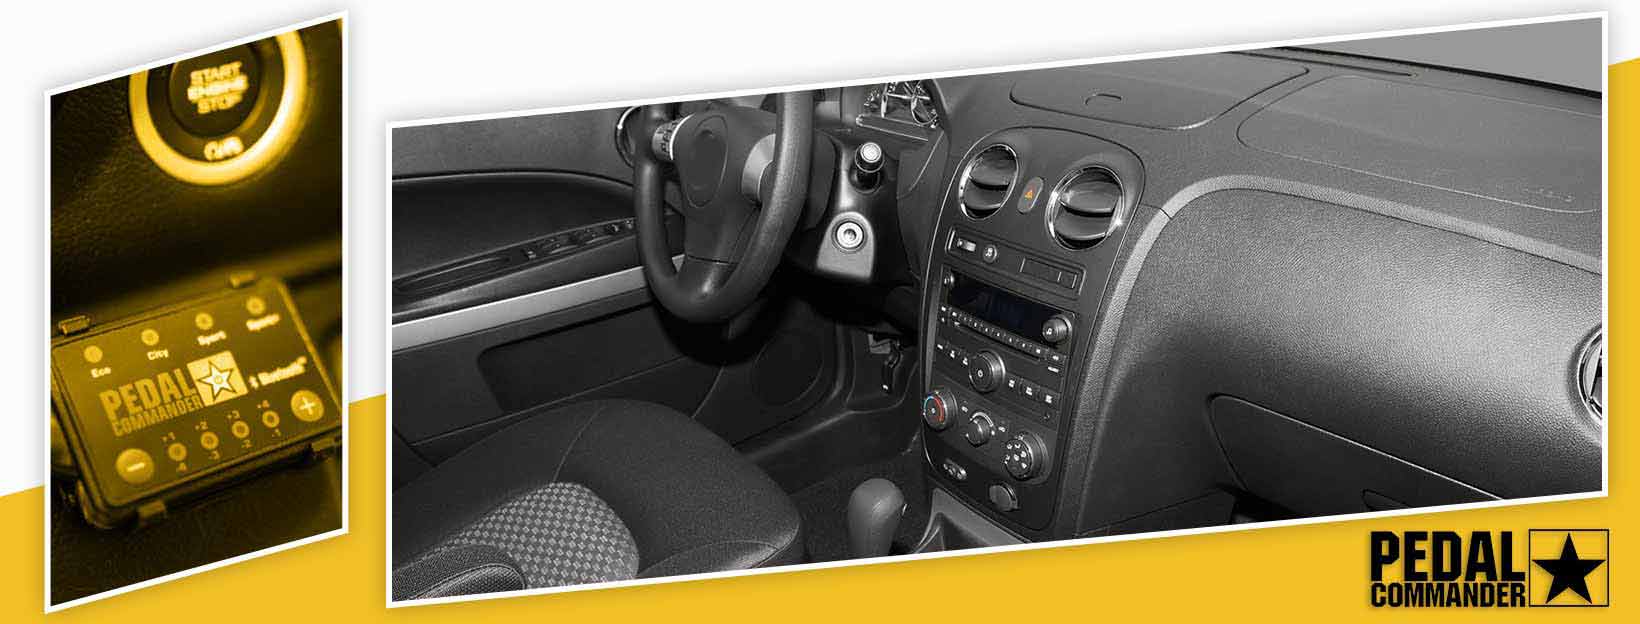 Pedal Commander for Chevrolet HHR - interior